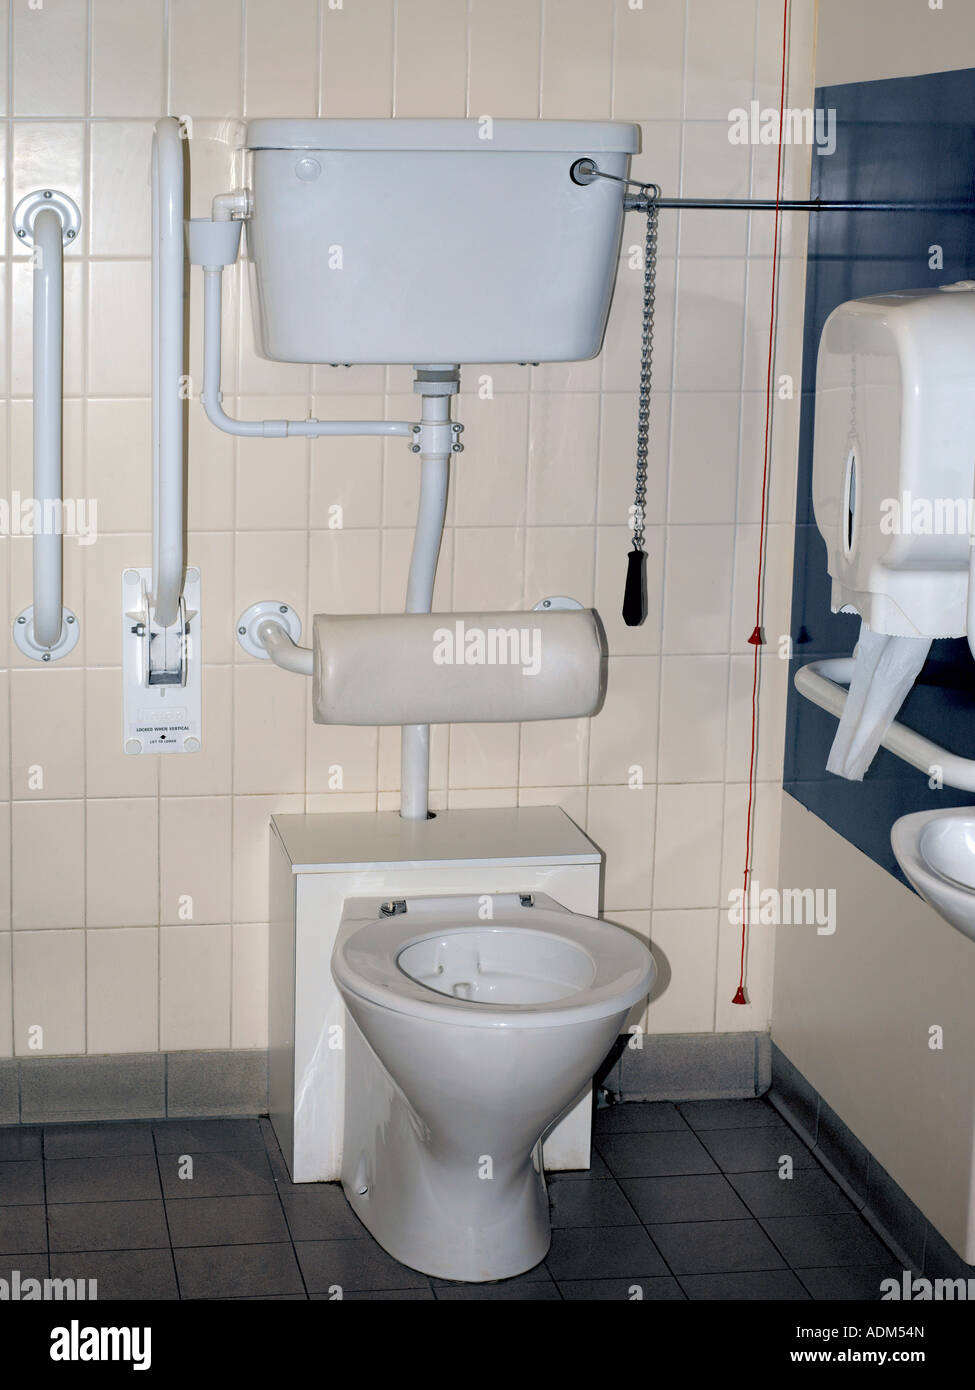 Cistern toilet fotografías e imágenes de alta resolución - Alamy